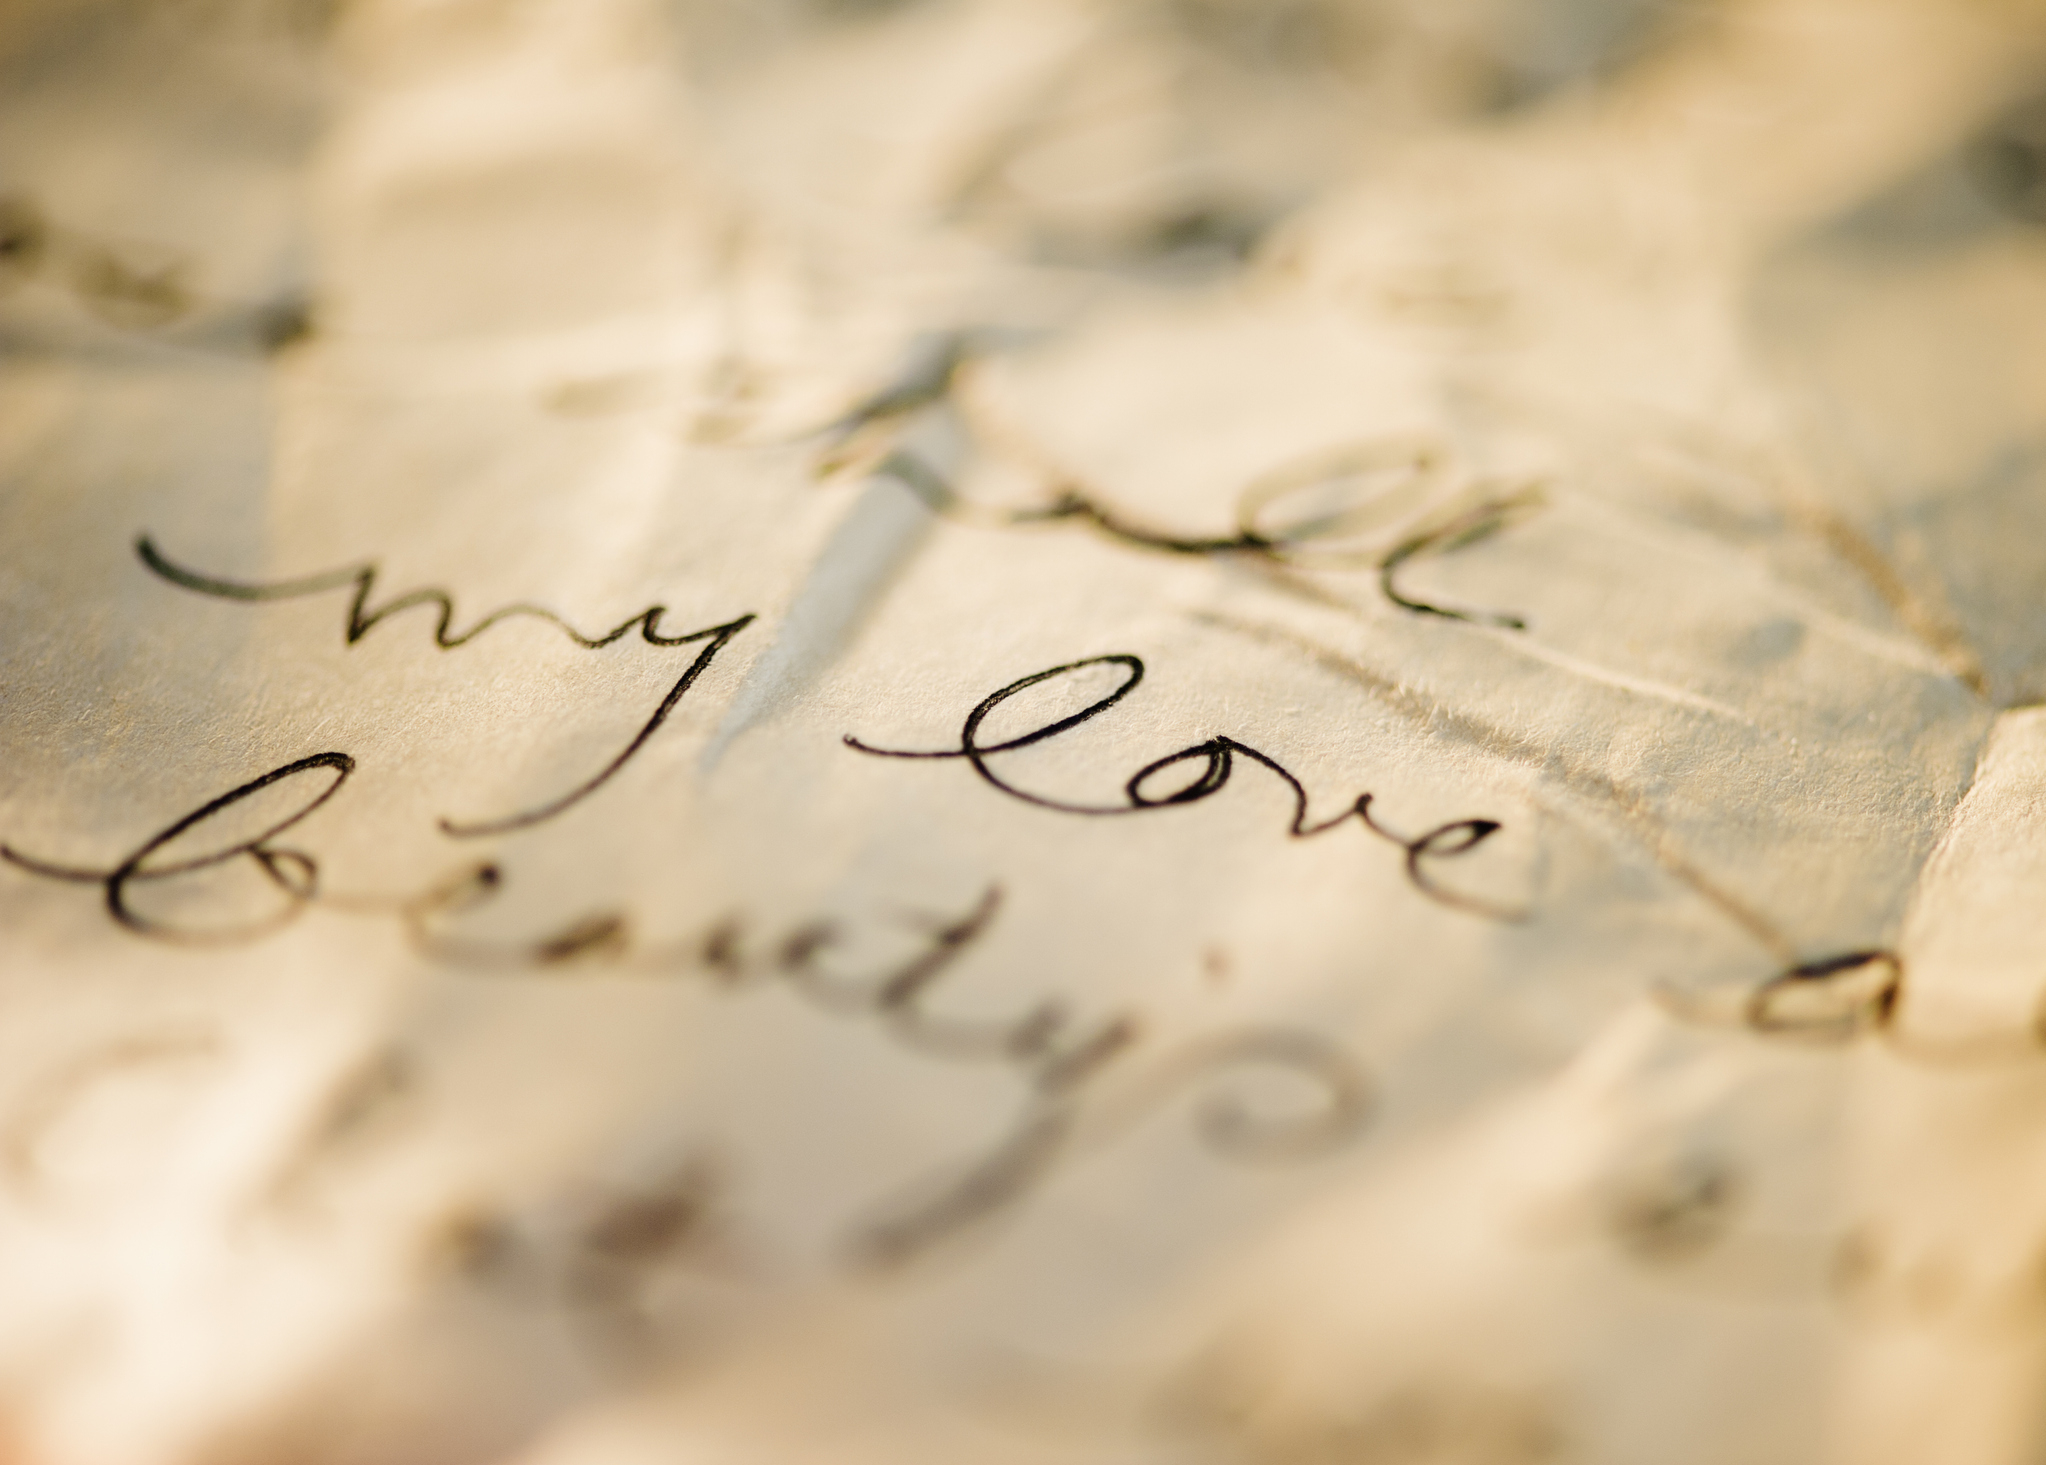 &quot;my love&quot; written in cursive